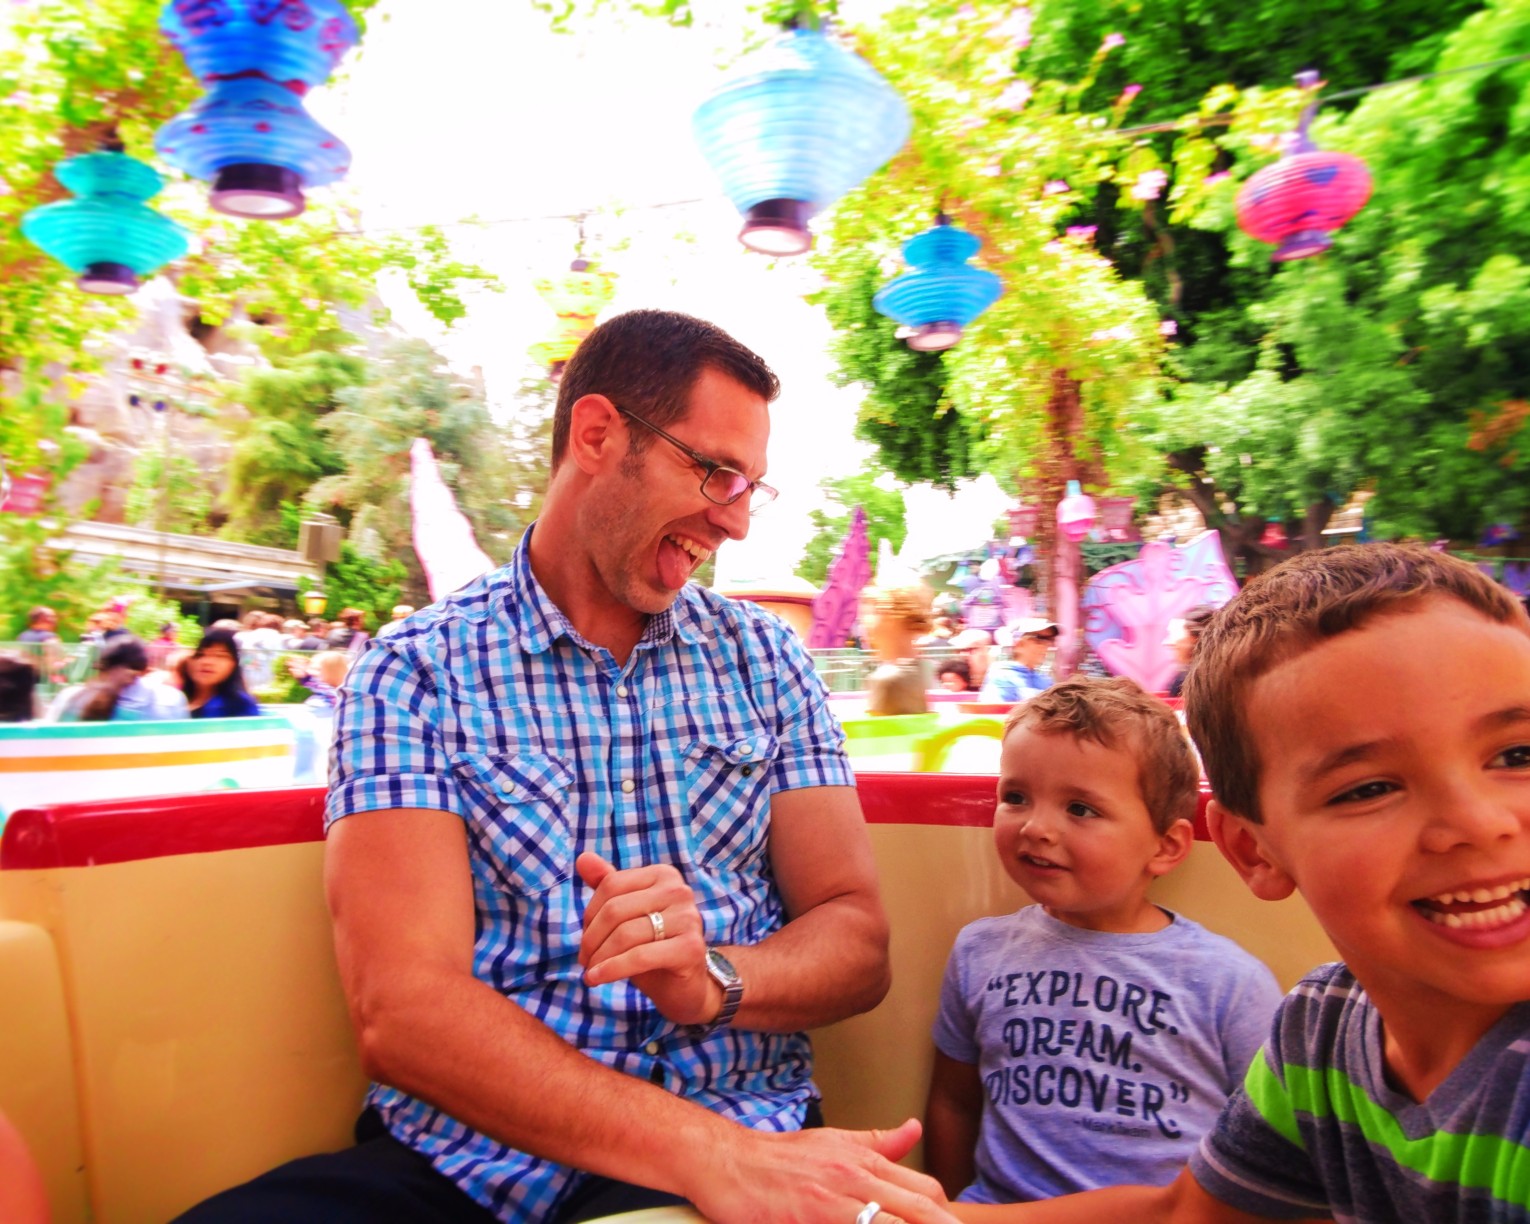 Taylor Family spinning in Teacups in Fantasyland Disneyland 1